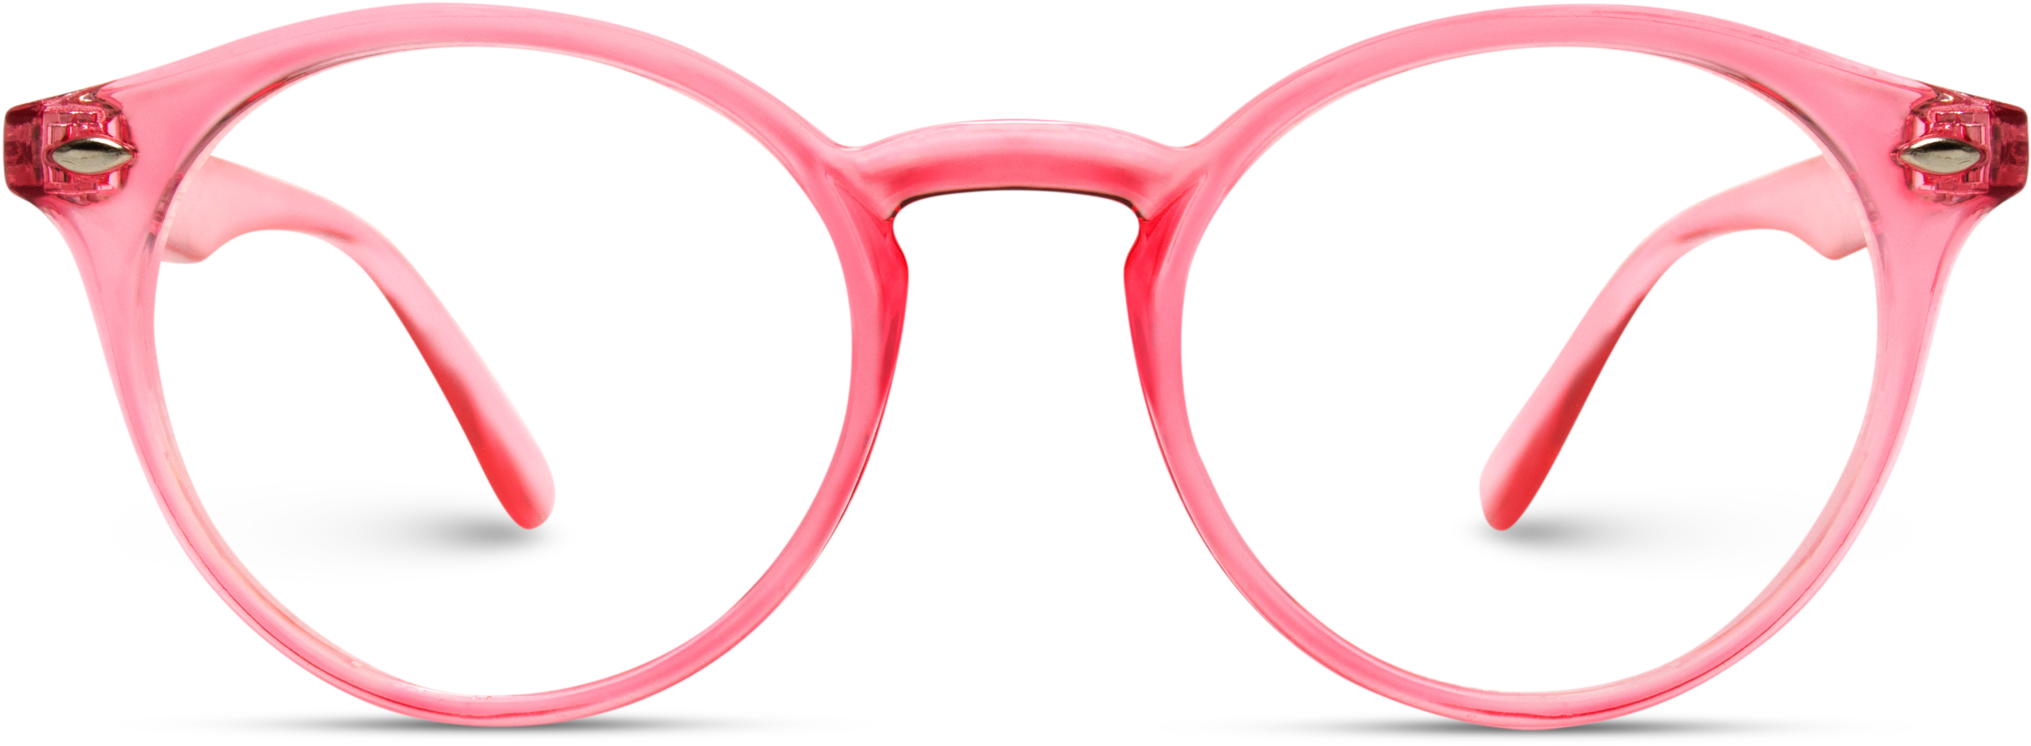 Free Transparent Glasses Image, Download Free Transparent Glasses Image